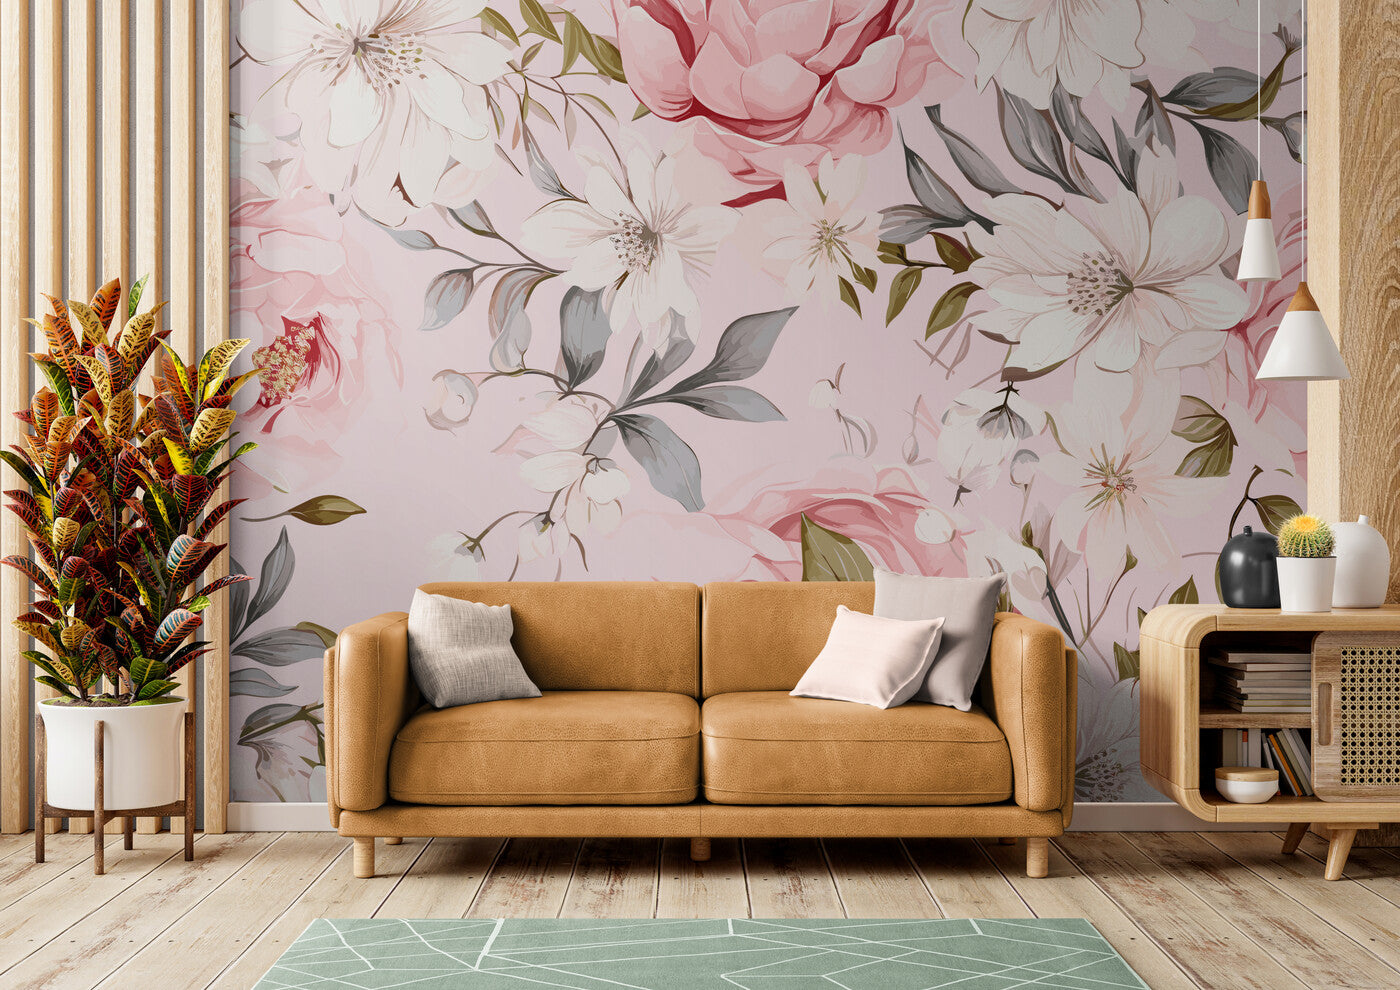 Papier peint fleuri vintage rose tapisserie murale salon